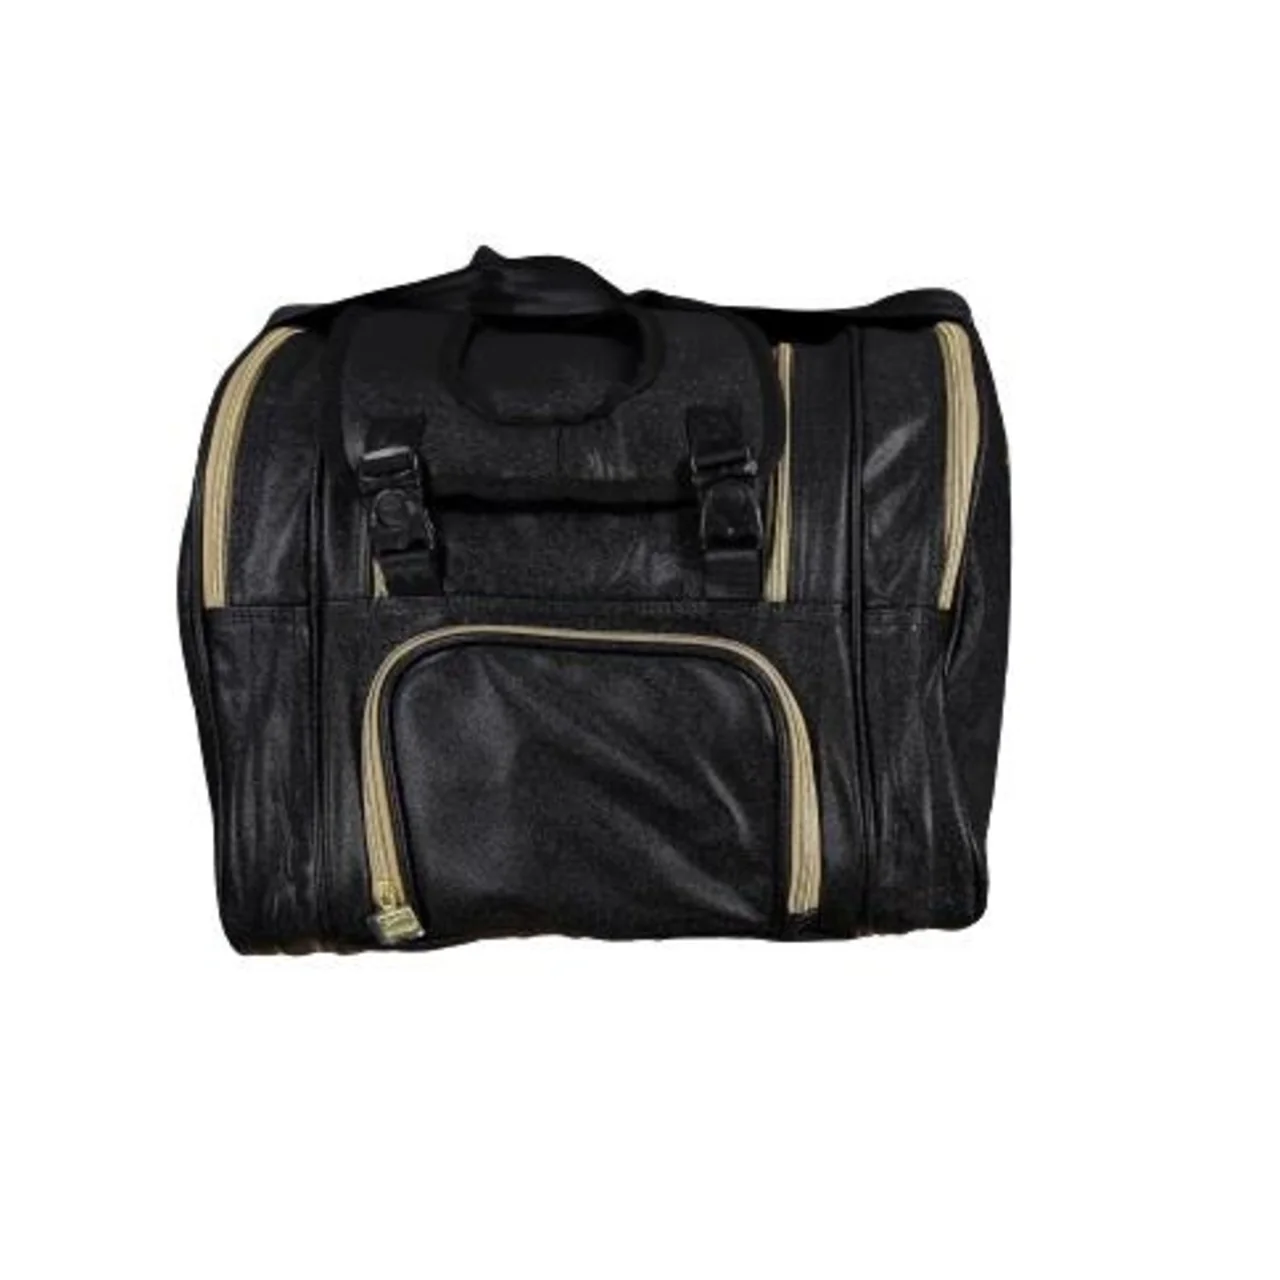 Slazenger Vibora Pro Padel Bag Black